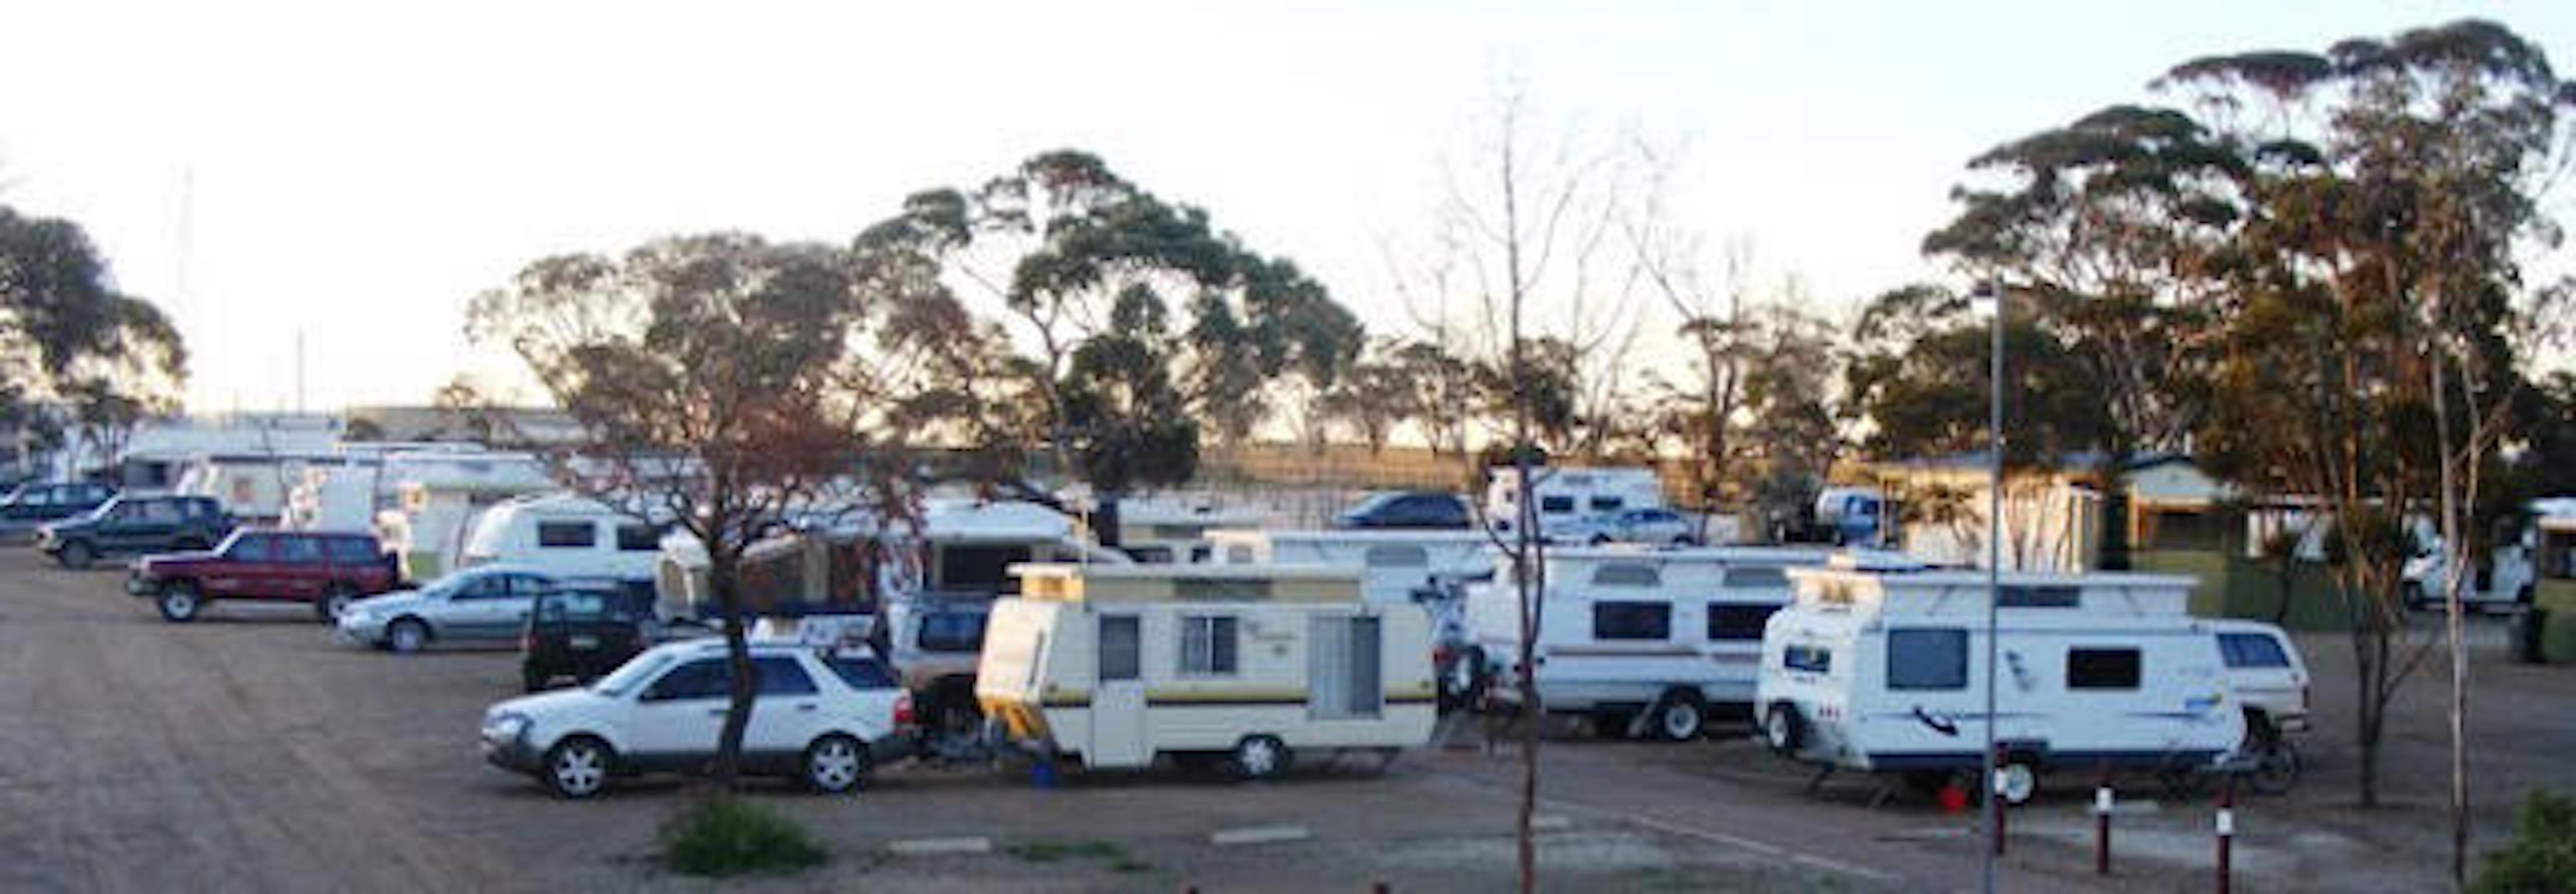 Woomera Traveller's Village and Caravan Park - Accommodation Nelson Bay